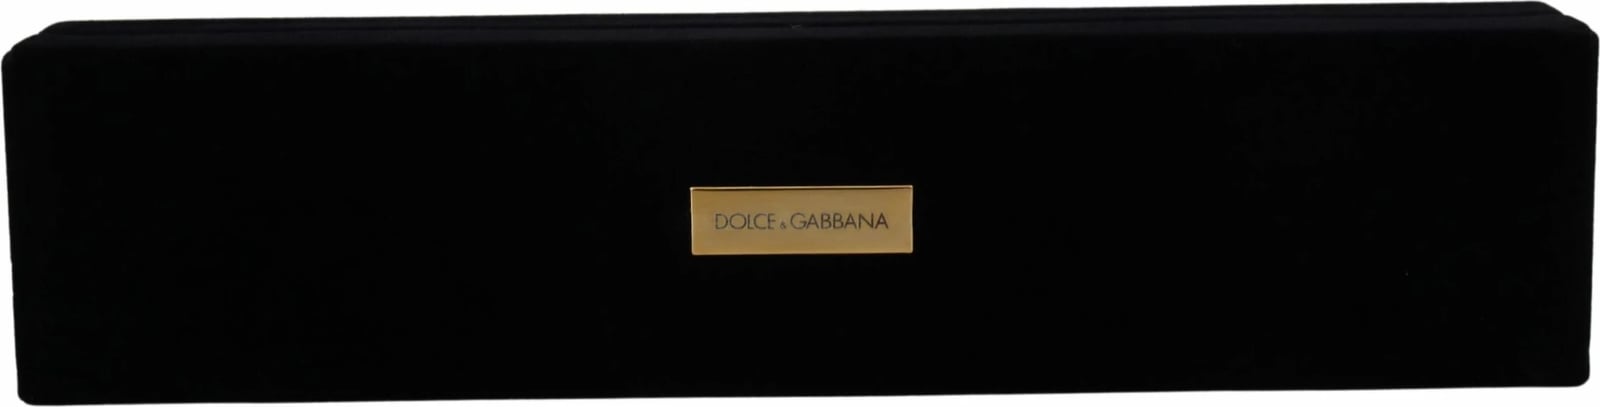 Kuti bizhuterie Dolce & Gabbana, e zezë 